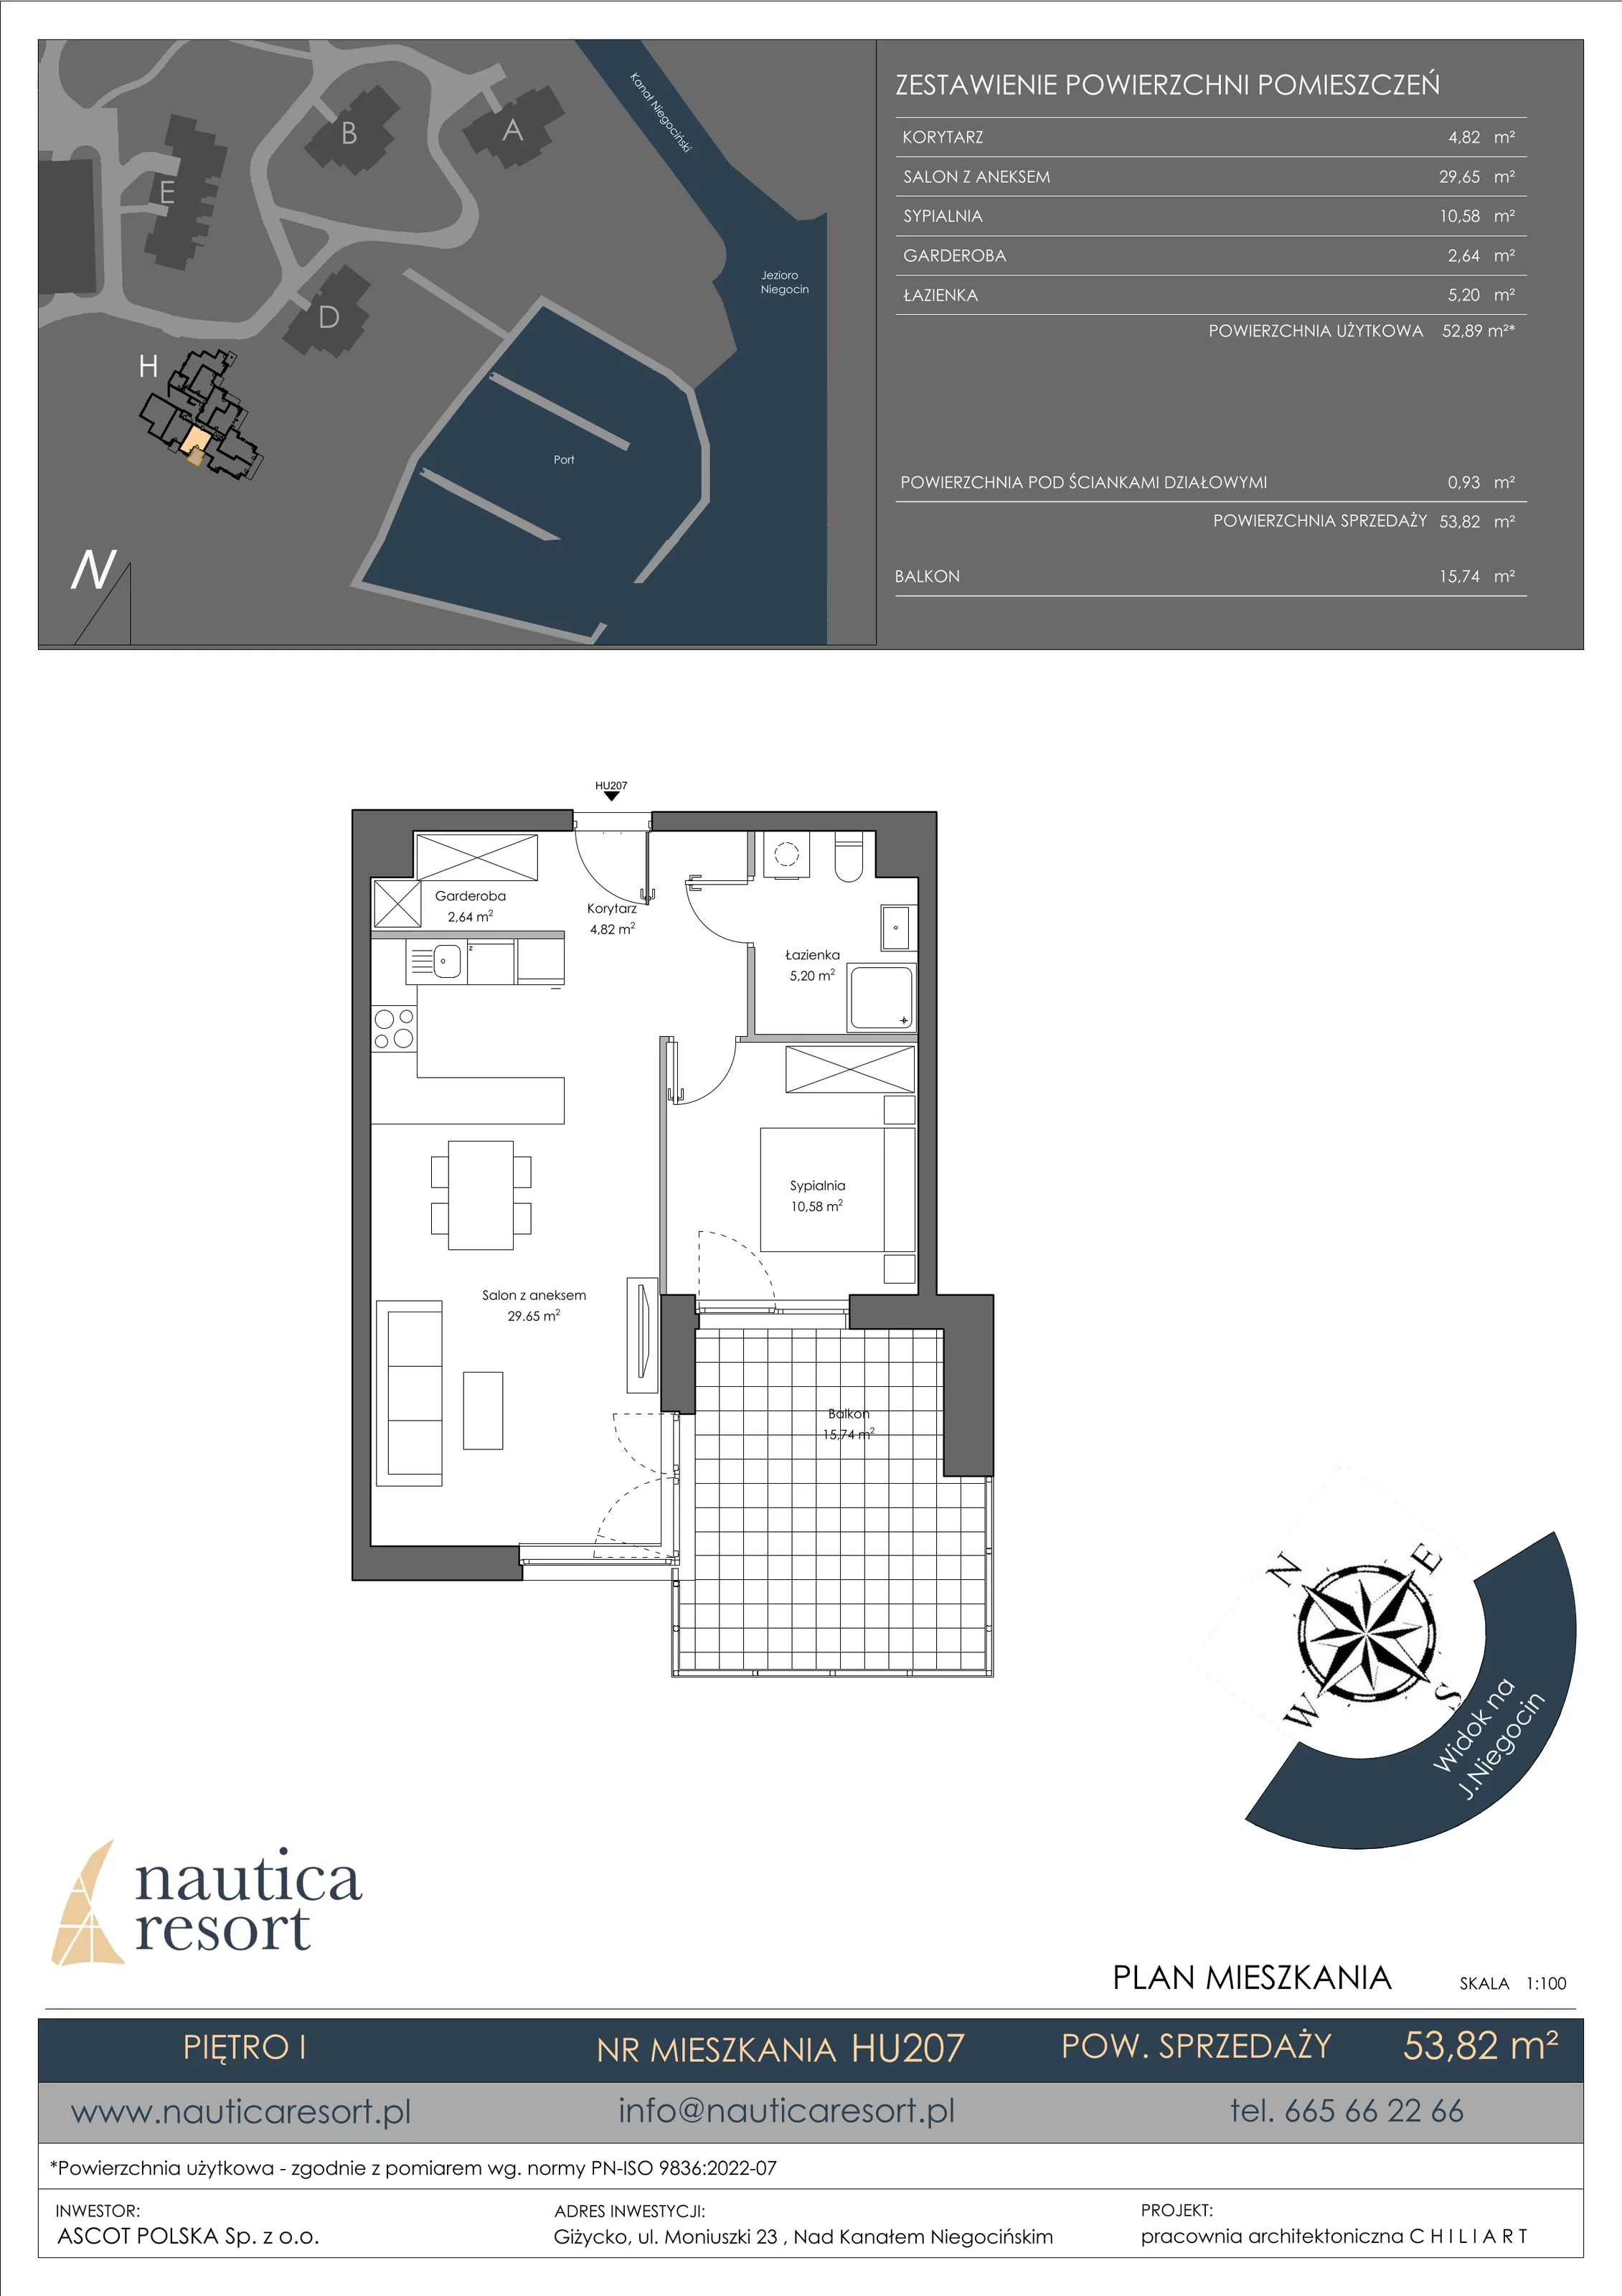 Apartament 53,82 m², piętro 1, oferta nr H.207, Nautica Resort, Giżycko, ul. Moniuszki 23